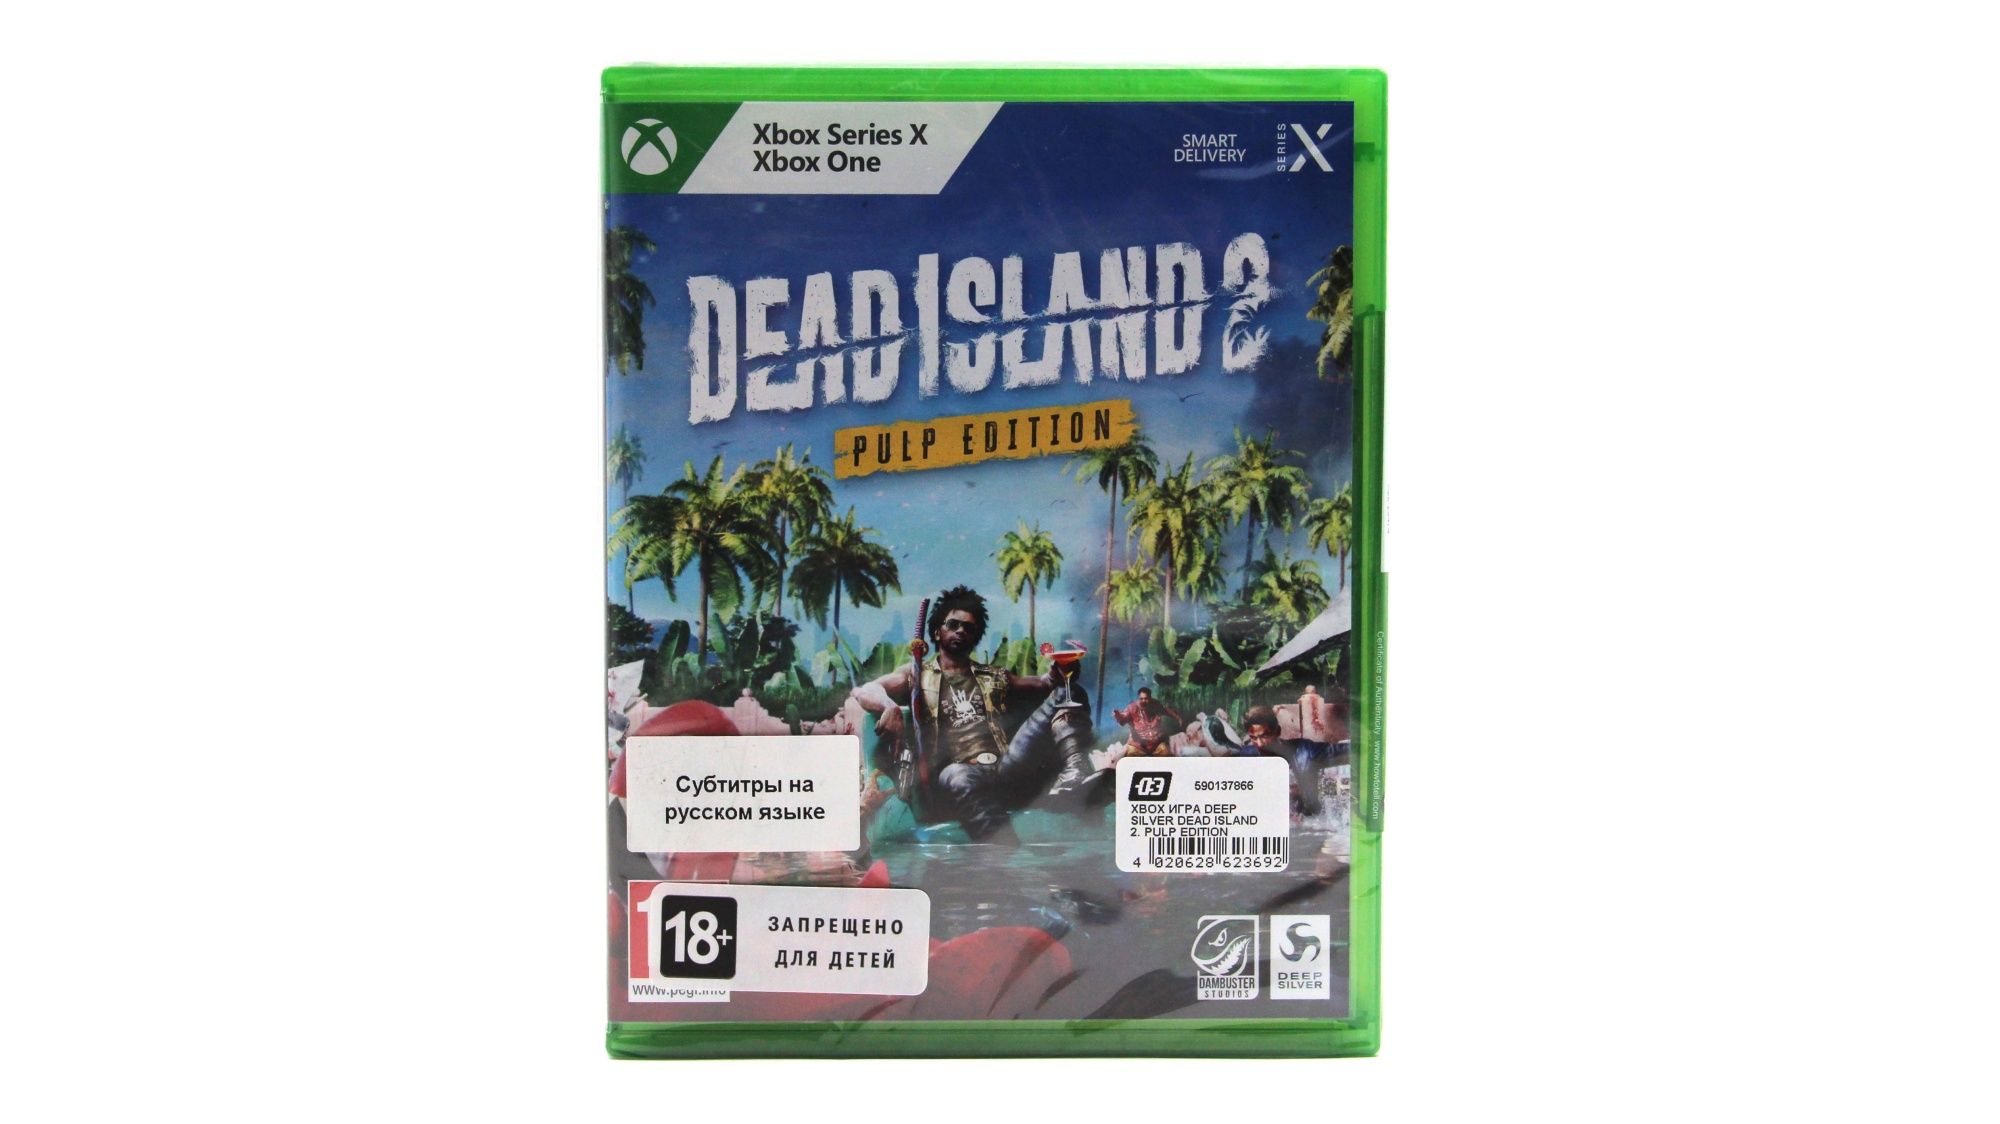 Pulp edition dead island. Dead Island 2 Pulp Edition что входит.